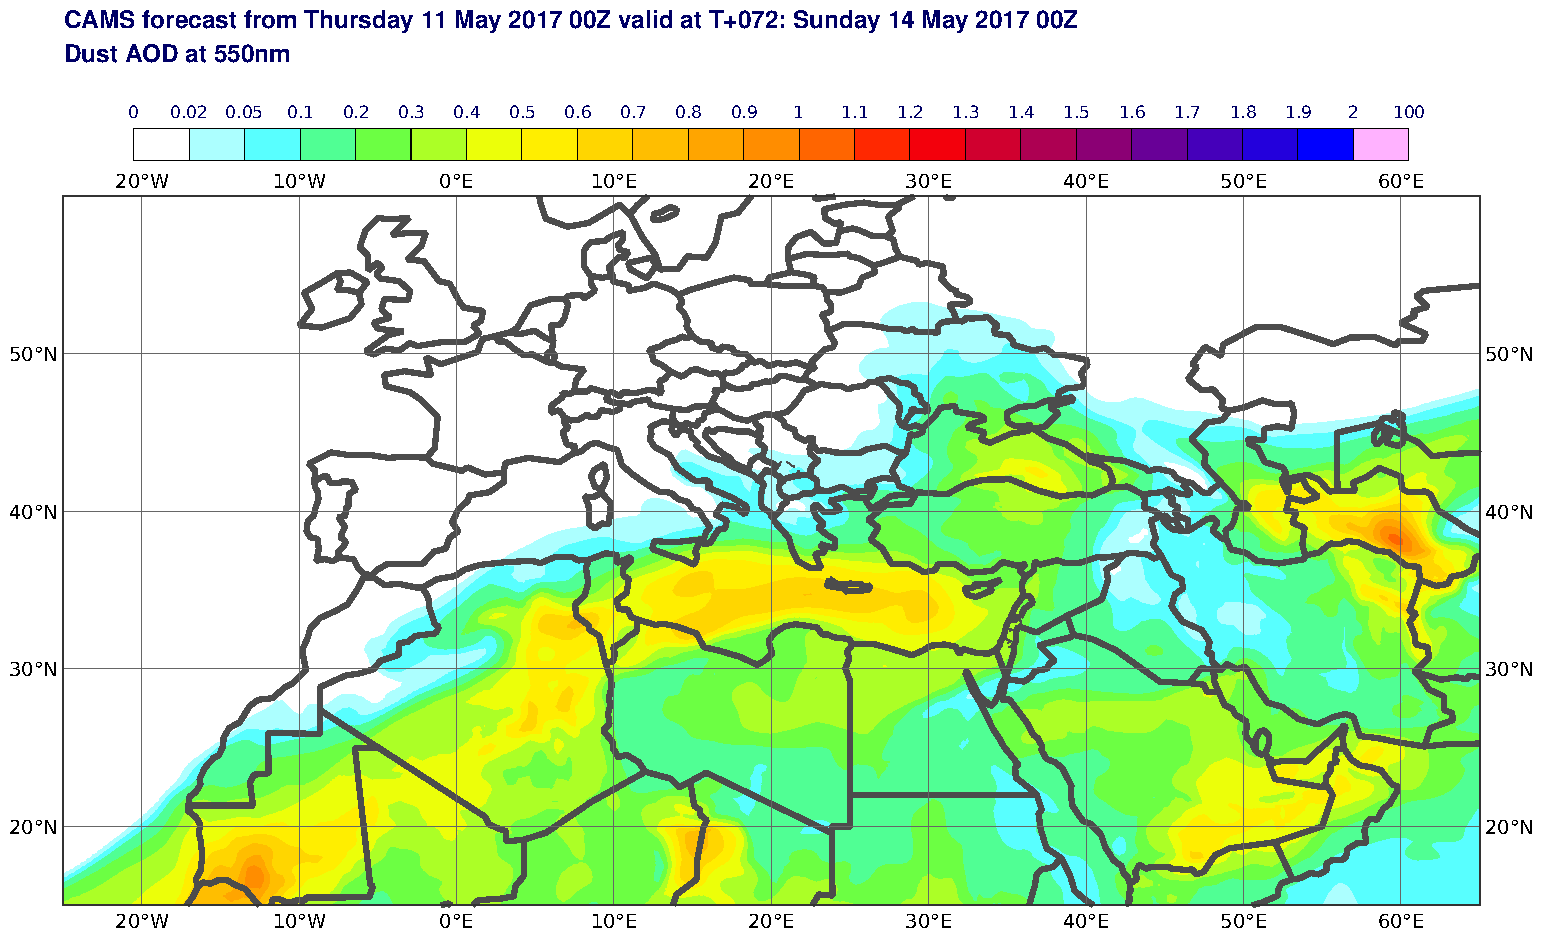 Dust AOD at 550nm valid at T72 - 2017-05-14 00:00